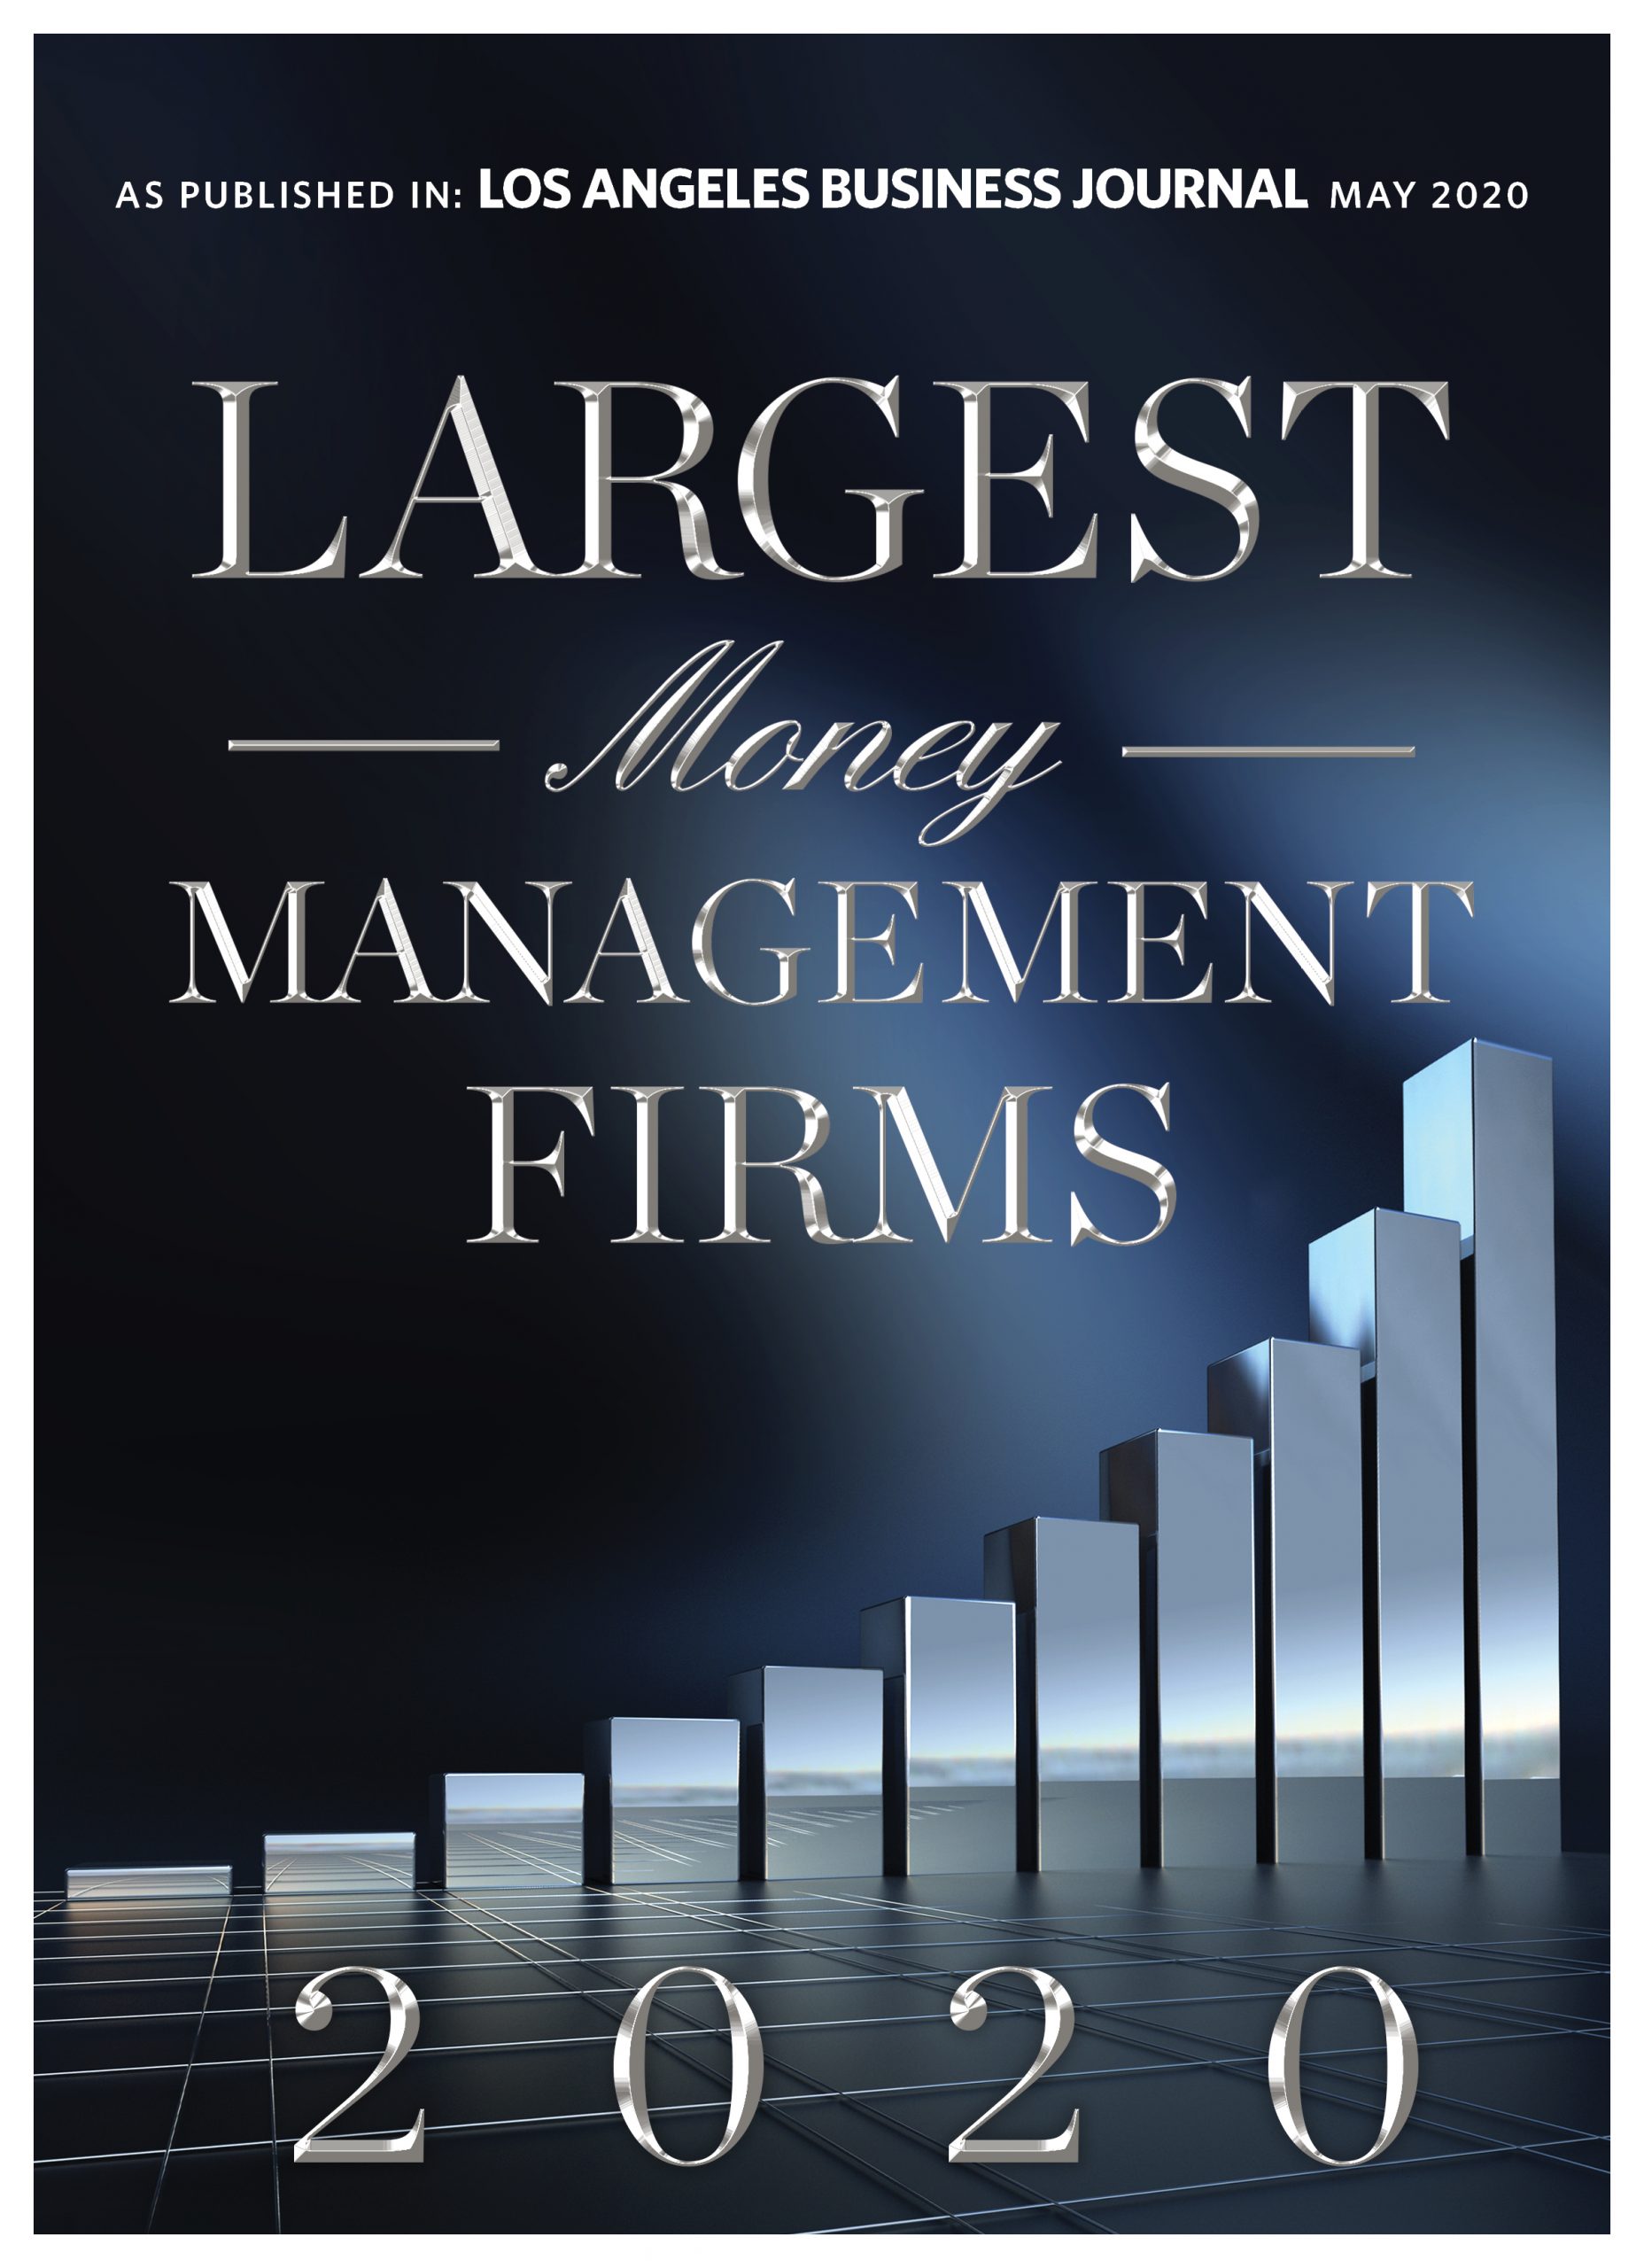 Avitas Wealth Management  Recognized as On of LA's Largest Money Management Firms!